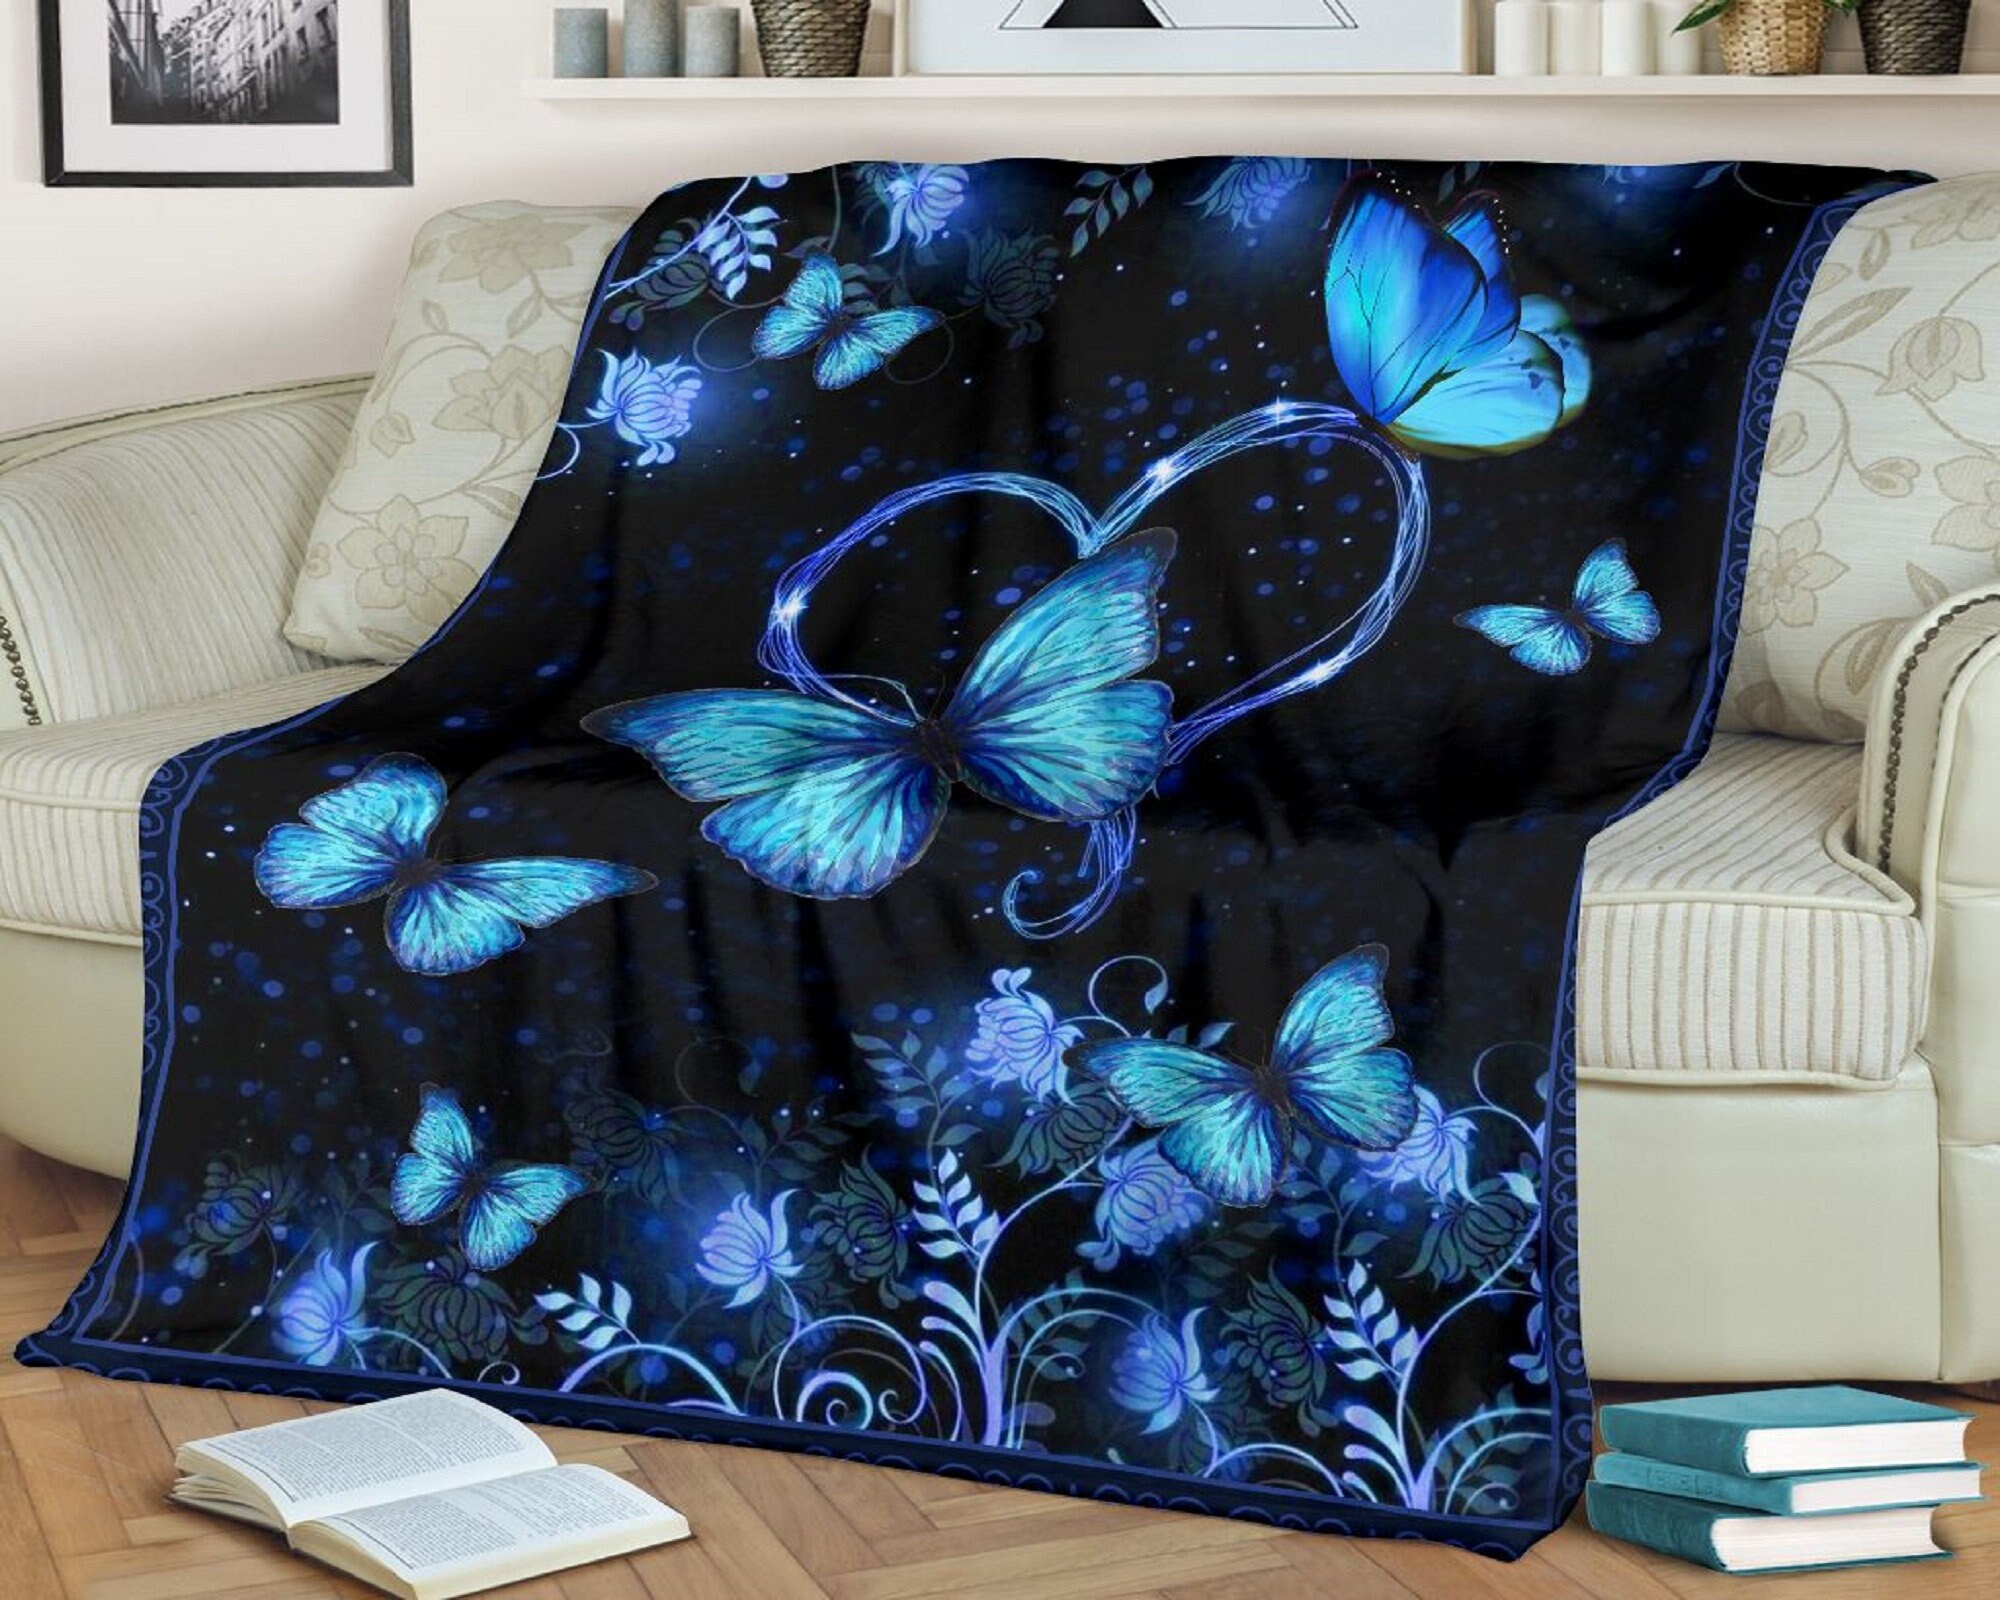 Butterfly flower blanket | Etsy